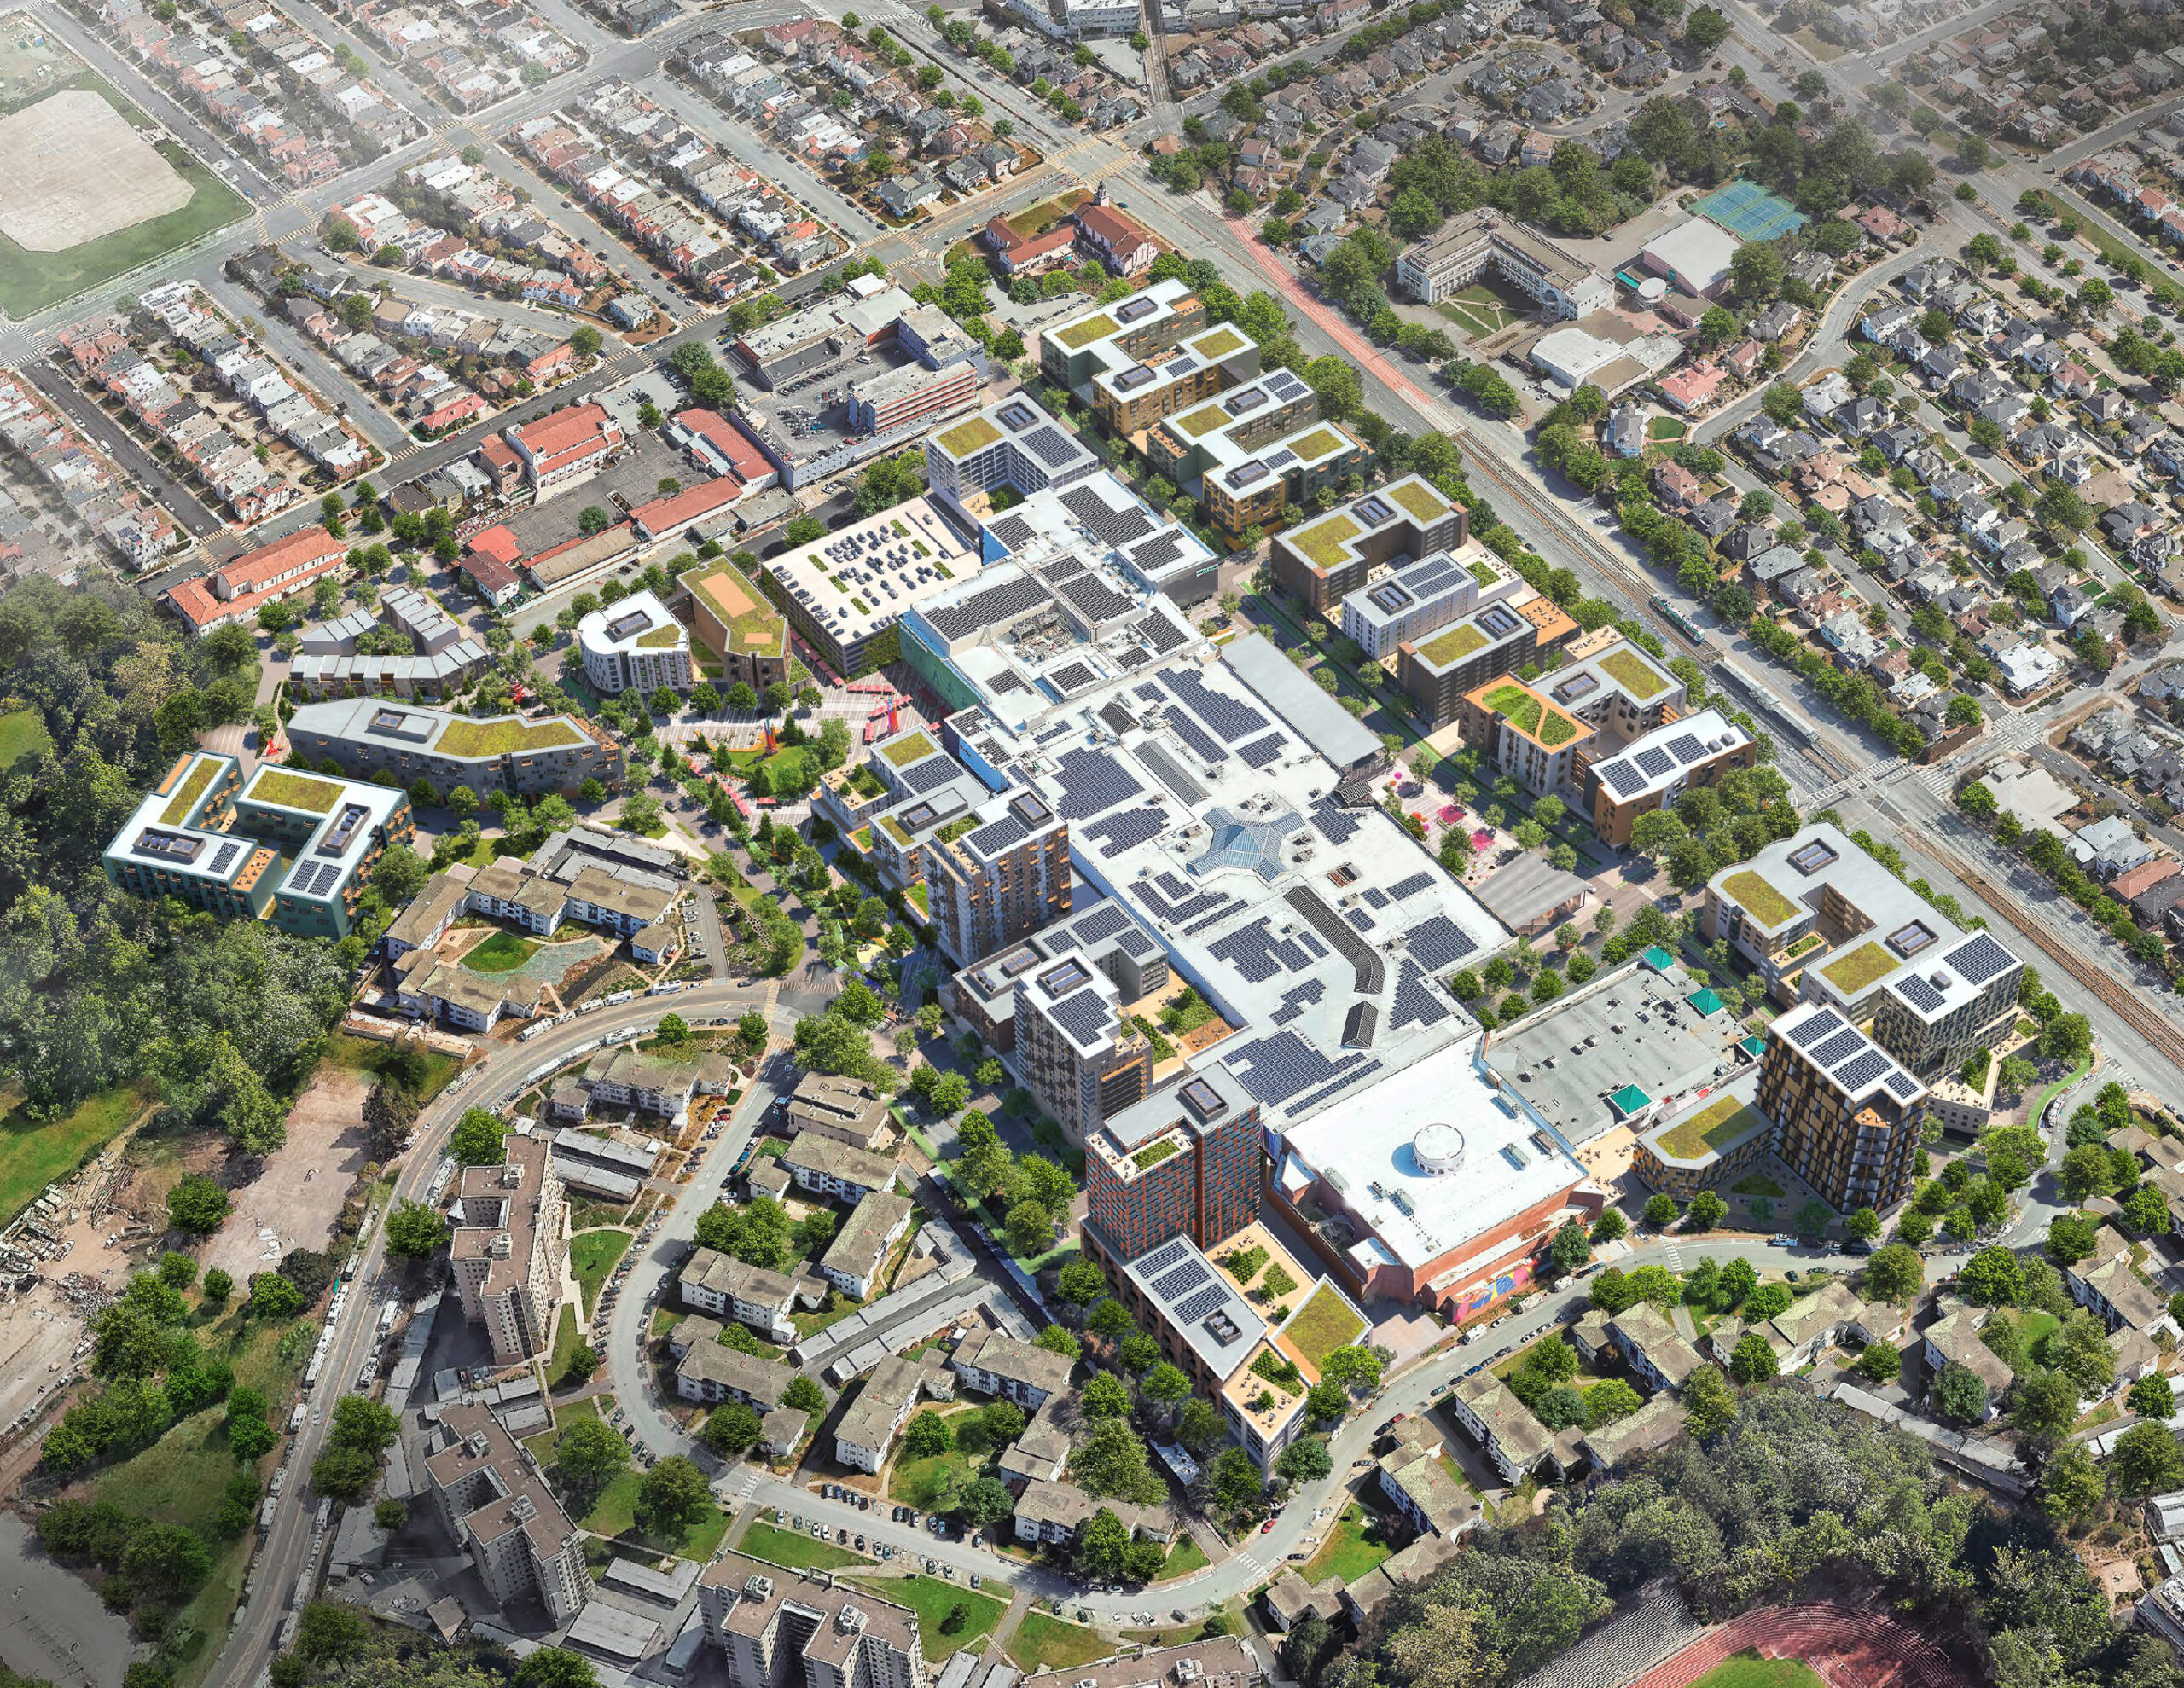 Stonestown Mall redevelopment aerial view, rendering by Design Distill